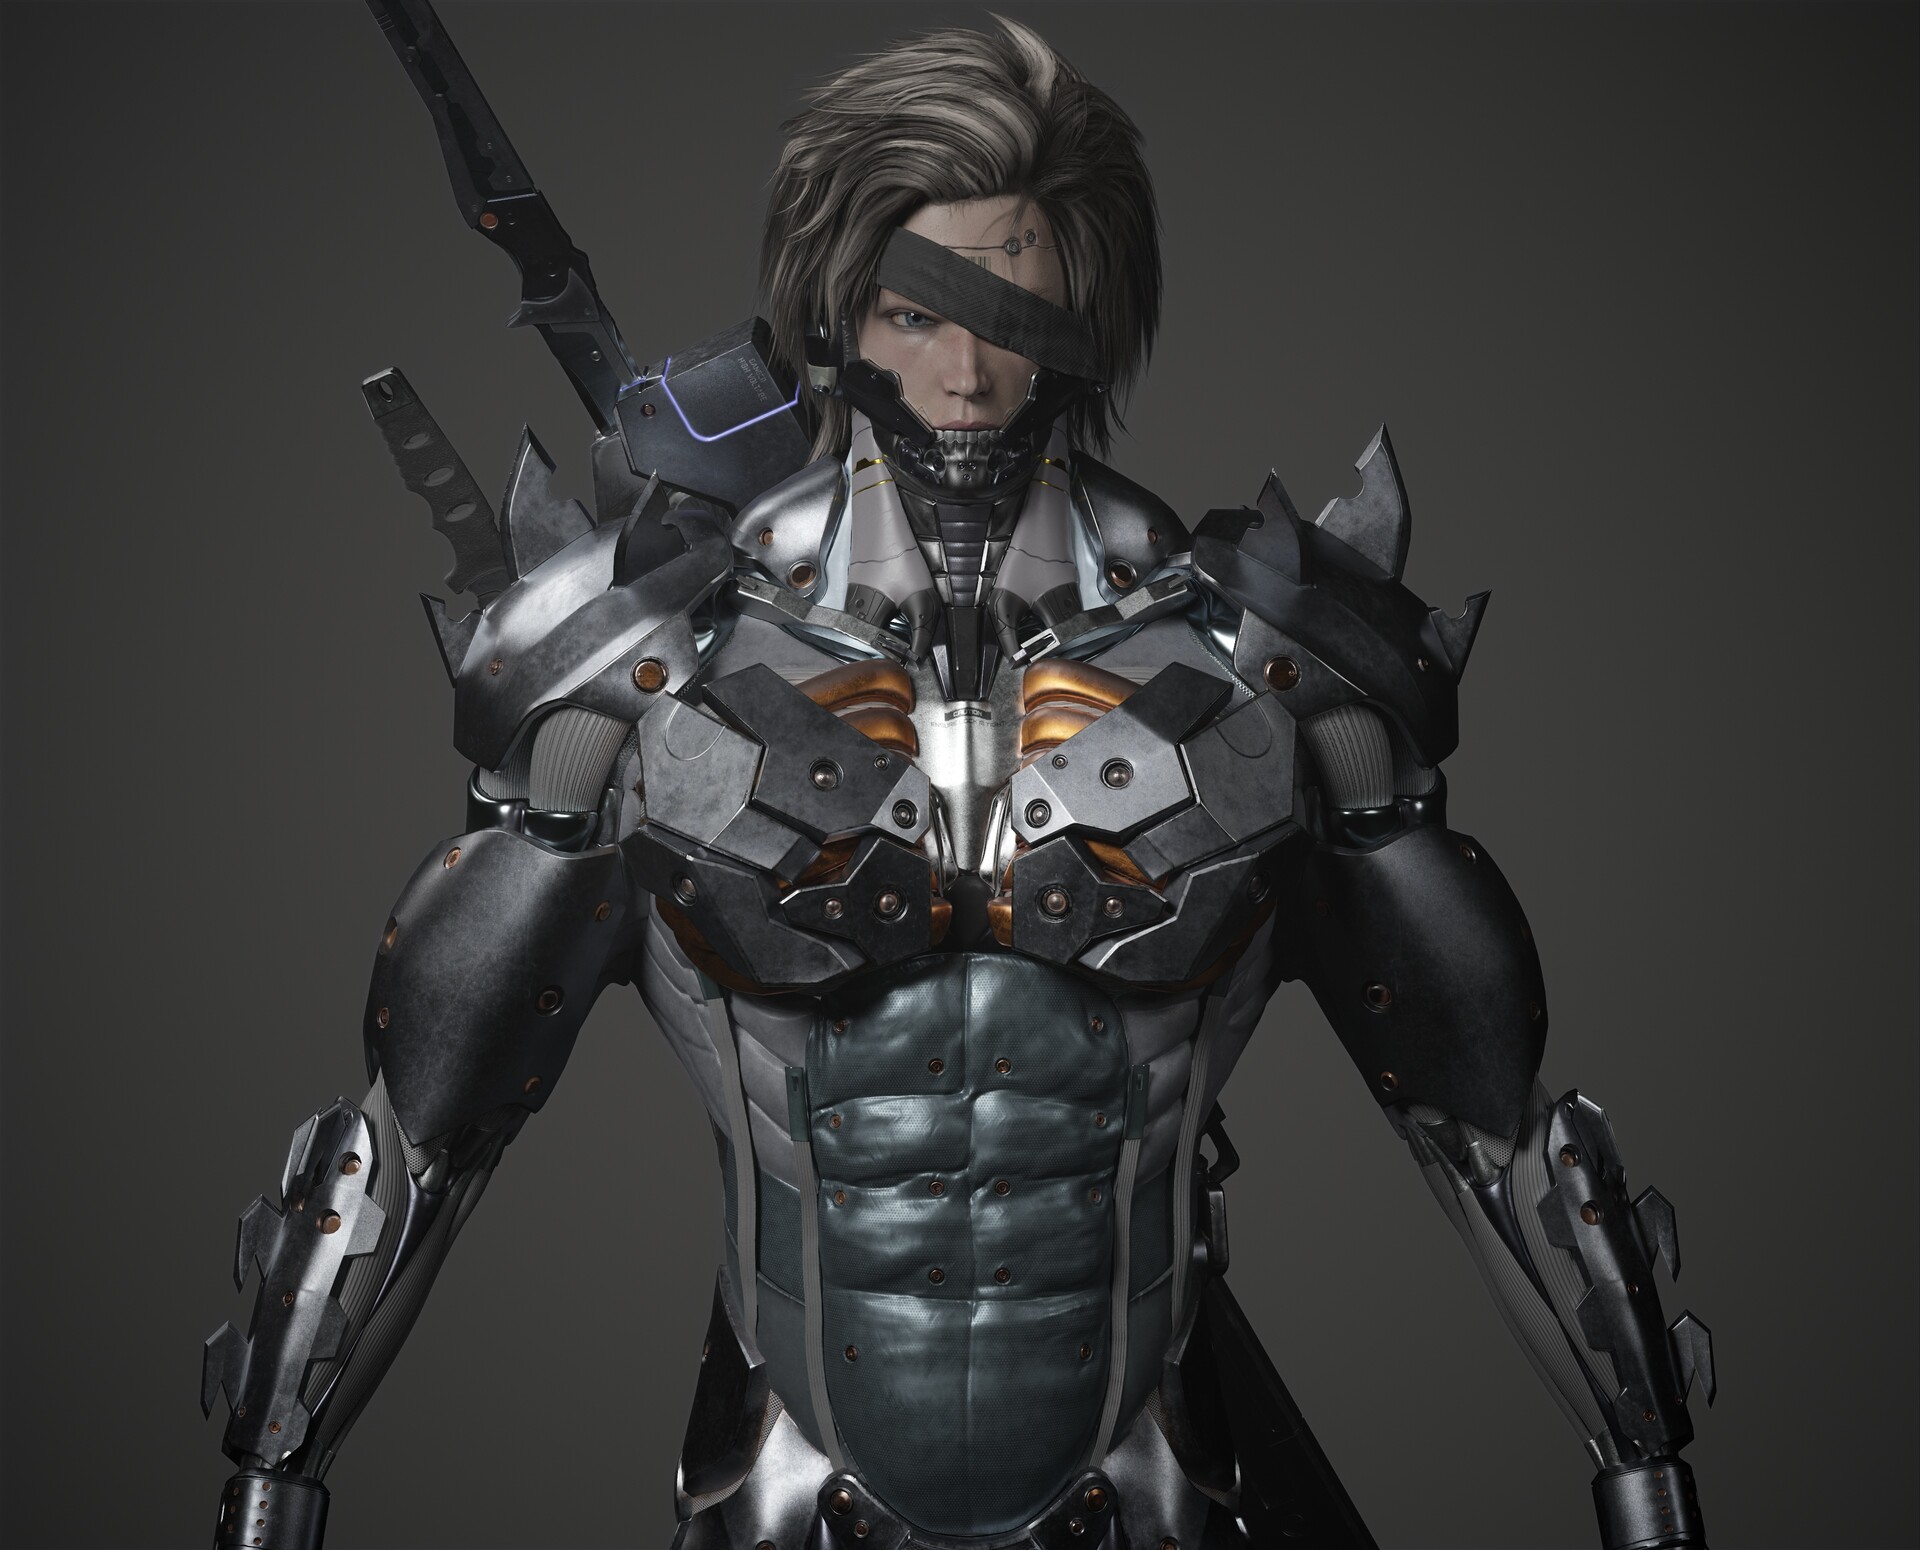 Raiden & Bladewolf Art - Metal Gear Rising: Revengeance Art Gallery